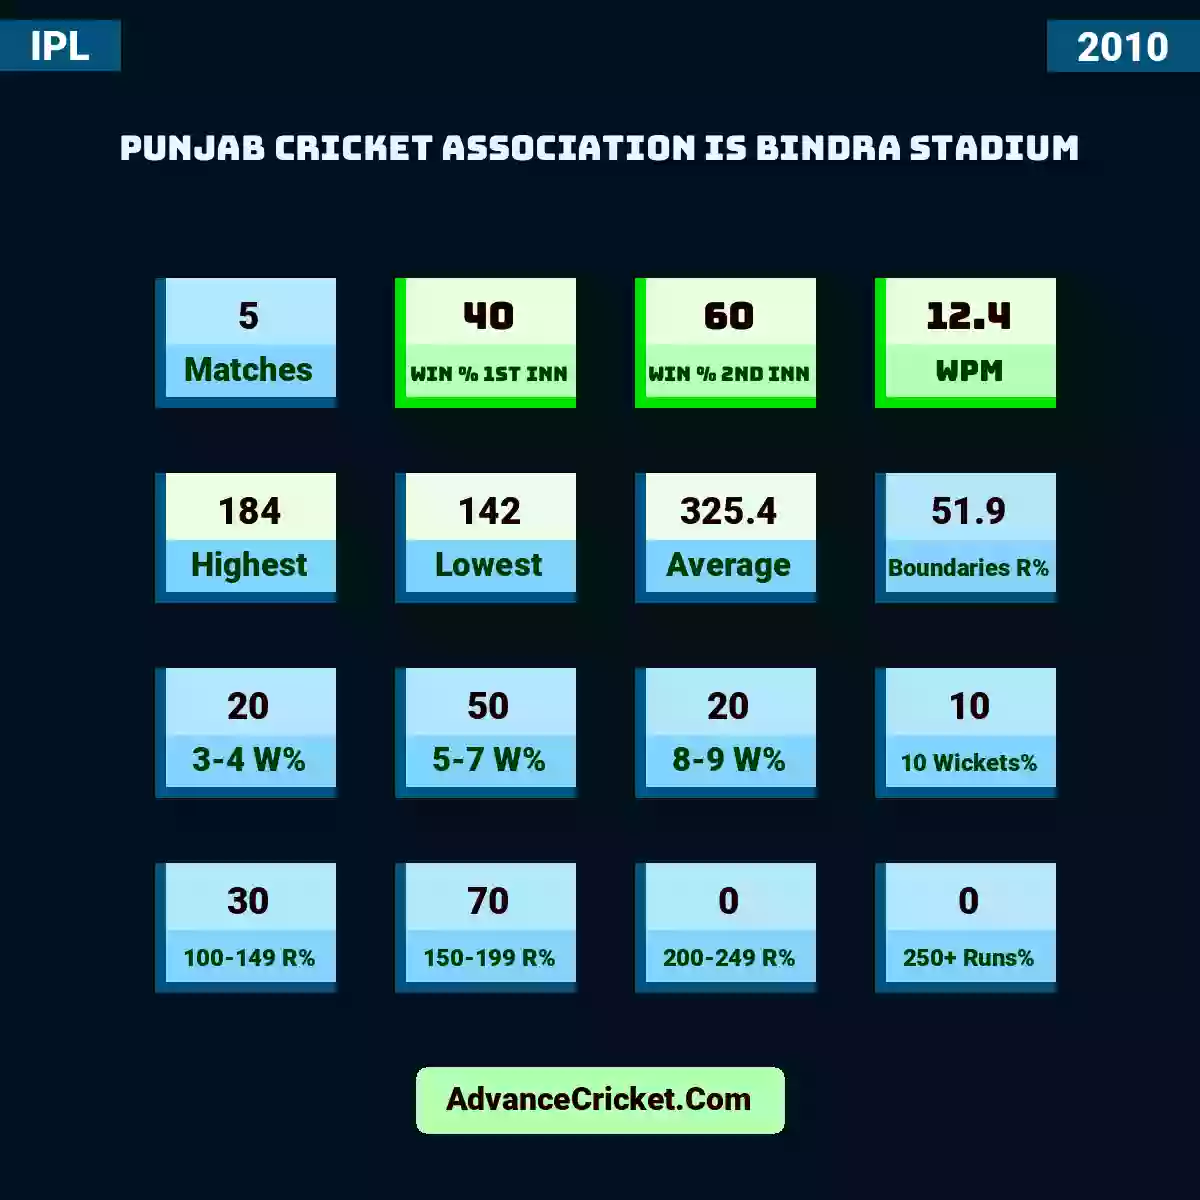 Image showing Punjab Cricket Association IS Bindra Stadium with Matches: 5, Win % 1st Inn: 40, Win % 2nd Inn: 60, WPM: 12.4, Highest: 184, Lowest: 142, Average: 325.4, Boundaries R%: 51.9, 3-4 W%: 20, 5-7 W%: 50, 8-9 W%: 20, 10 Wickets%: 10, 100-149 R%: 30, 150-199 R%: 70, 200-249 R%: 0, 250+ Runs%: